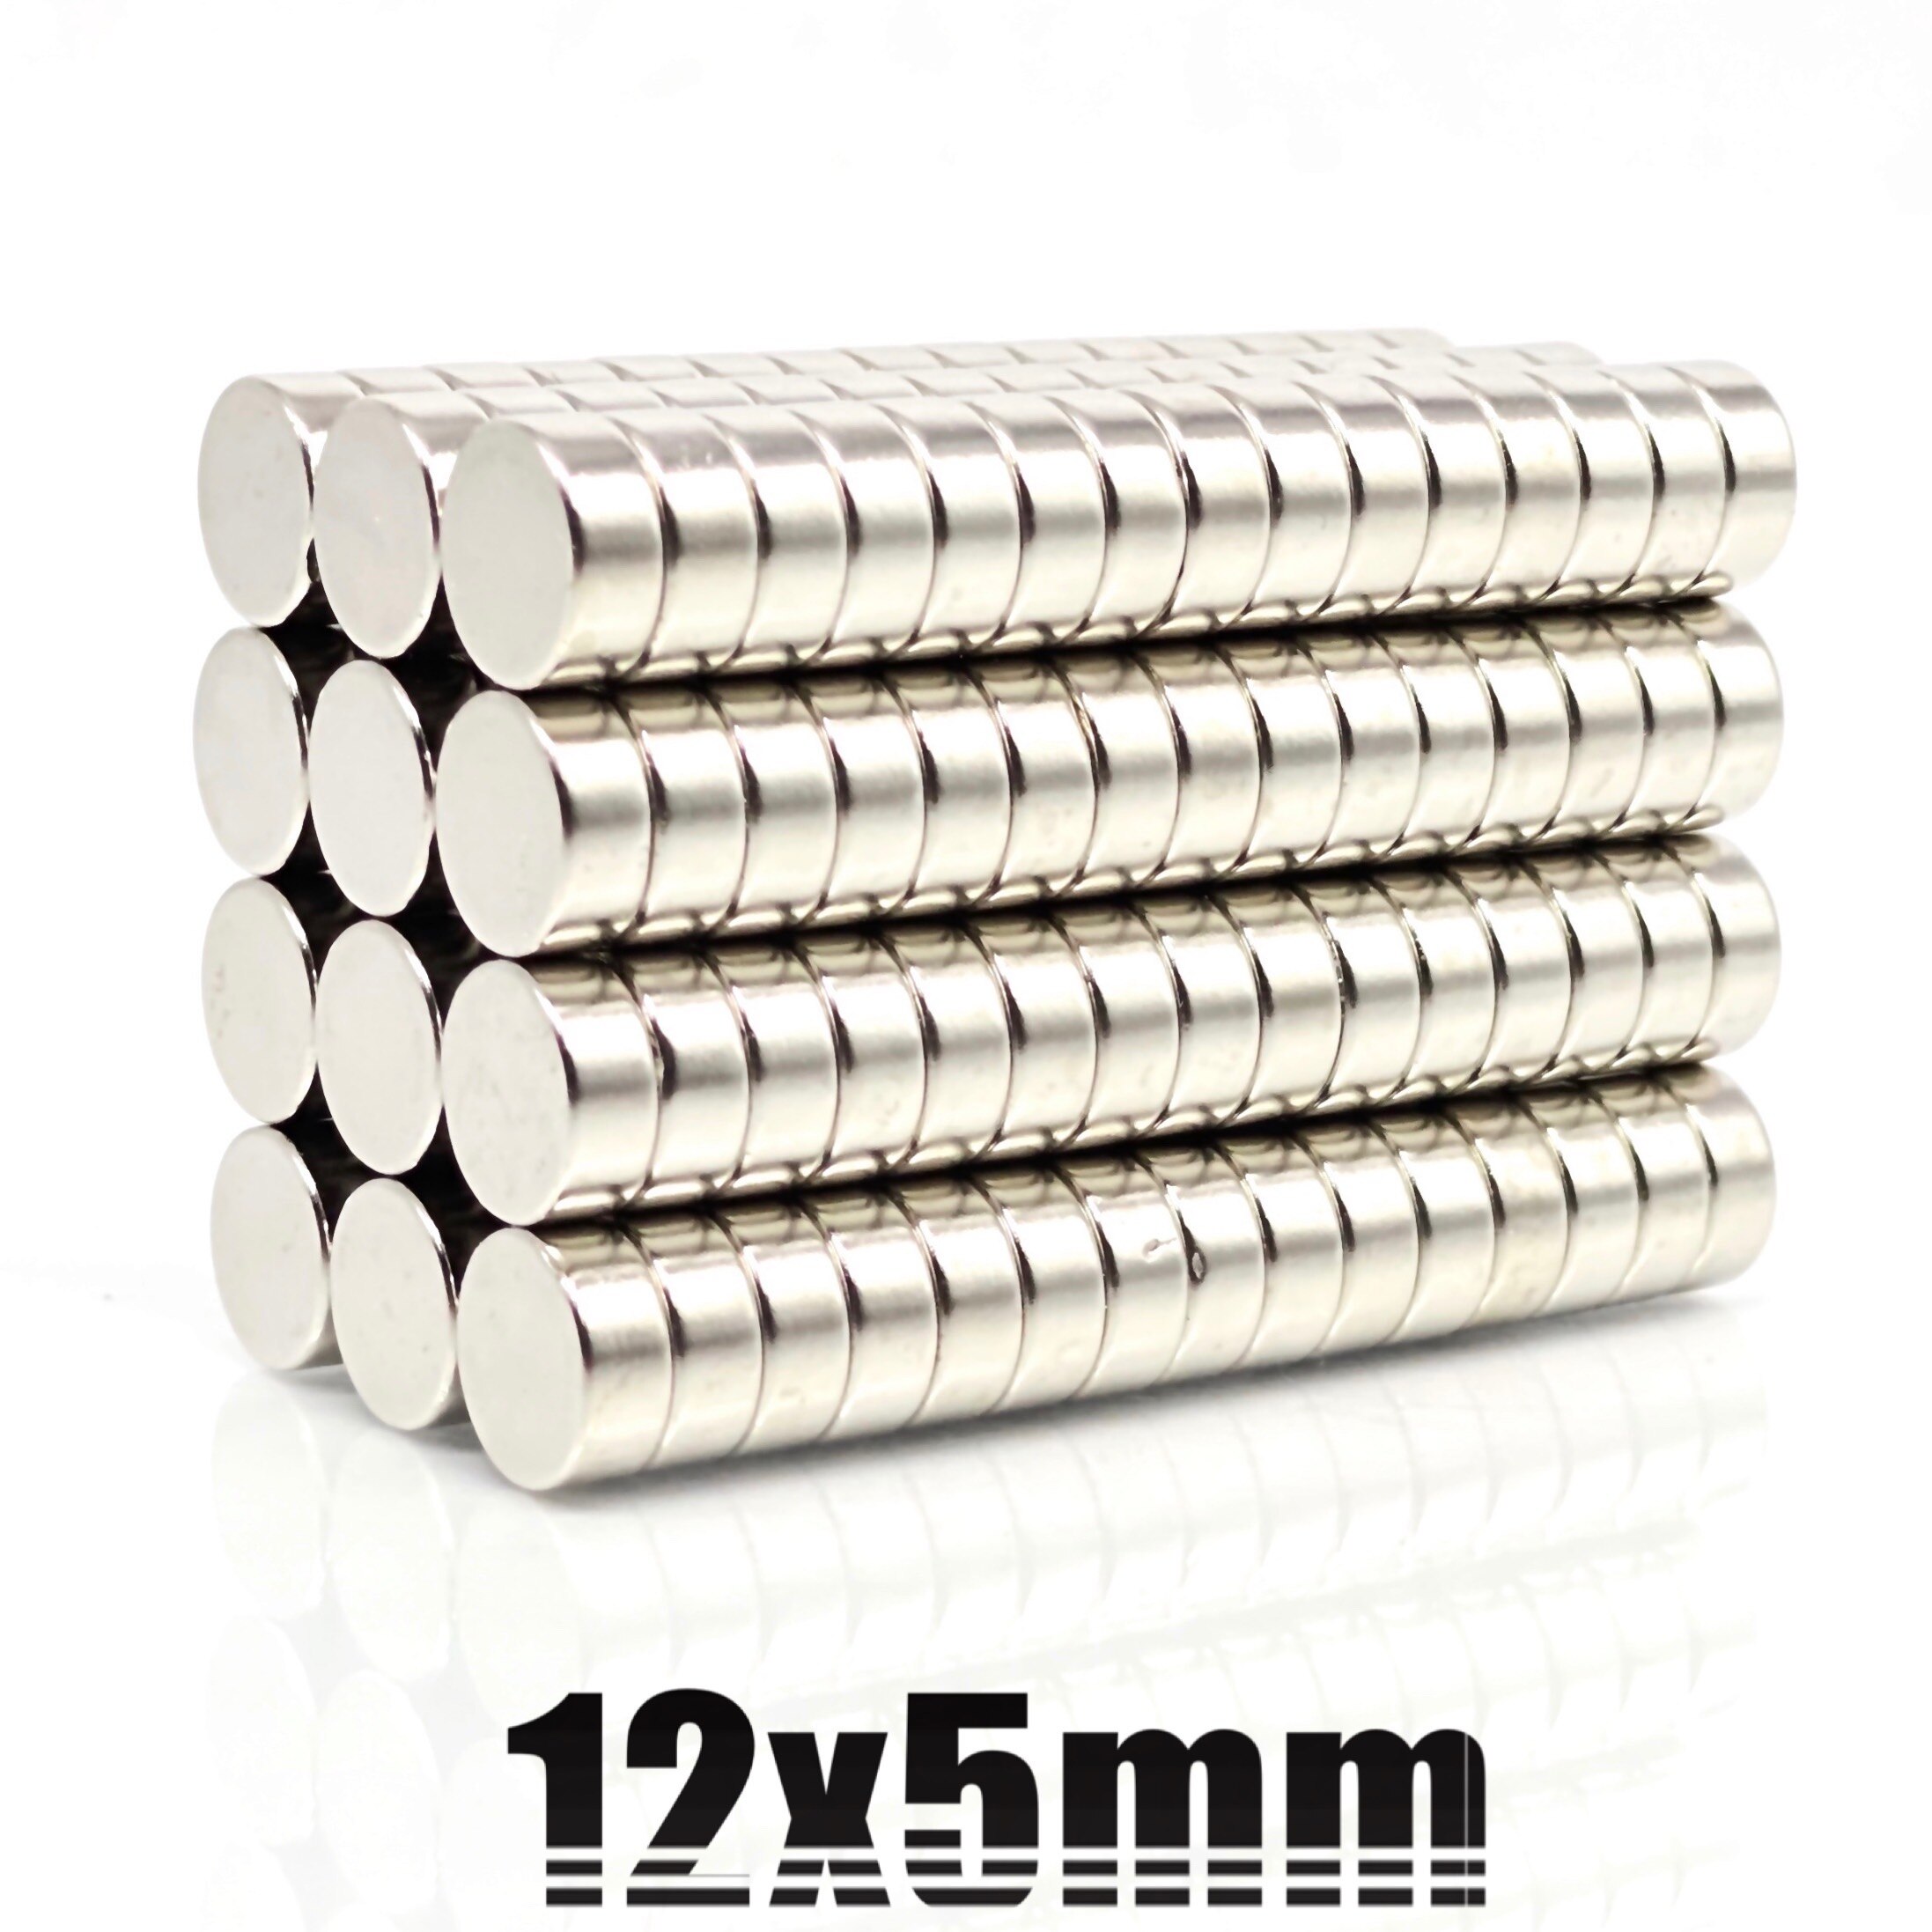 100 stk  n35 rund magnet 12 x 1 12 x 1.5 12 x 2 12 x 3 12 x 4 12 x 5 12 x 6 neodymmagnet permanent ndfeb superstærke kraftige magneter 12*1